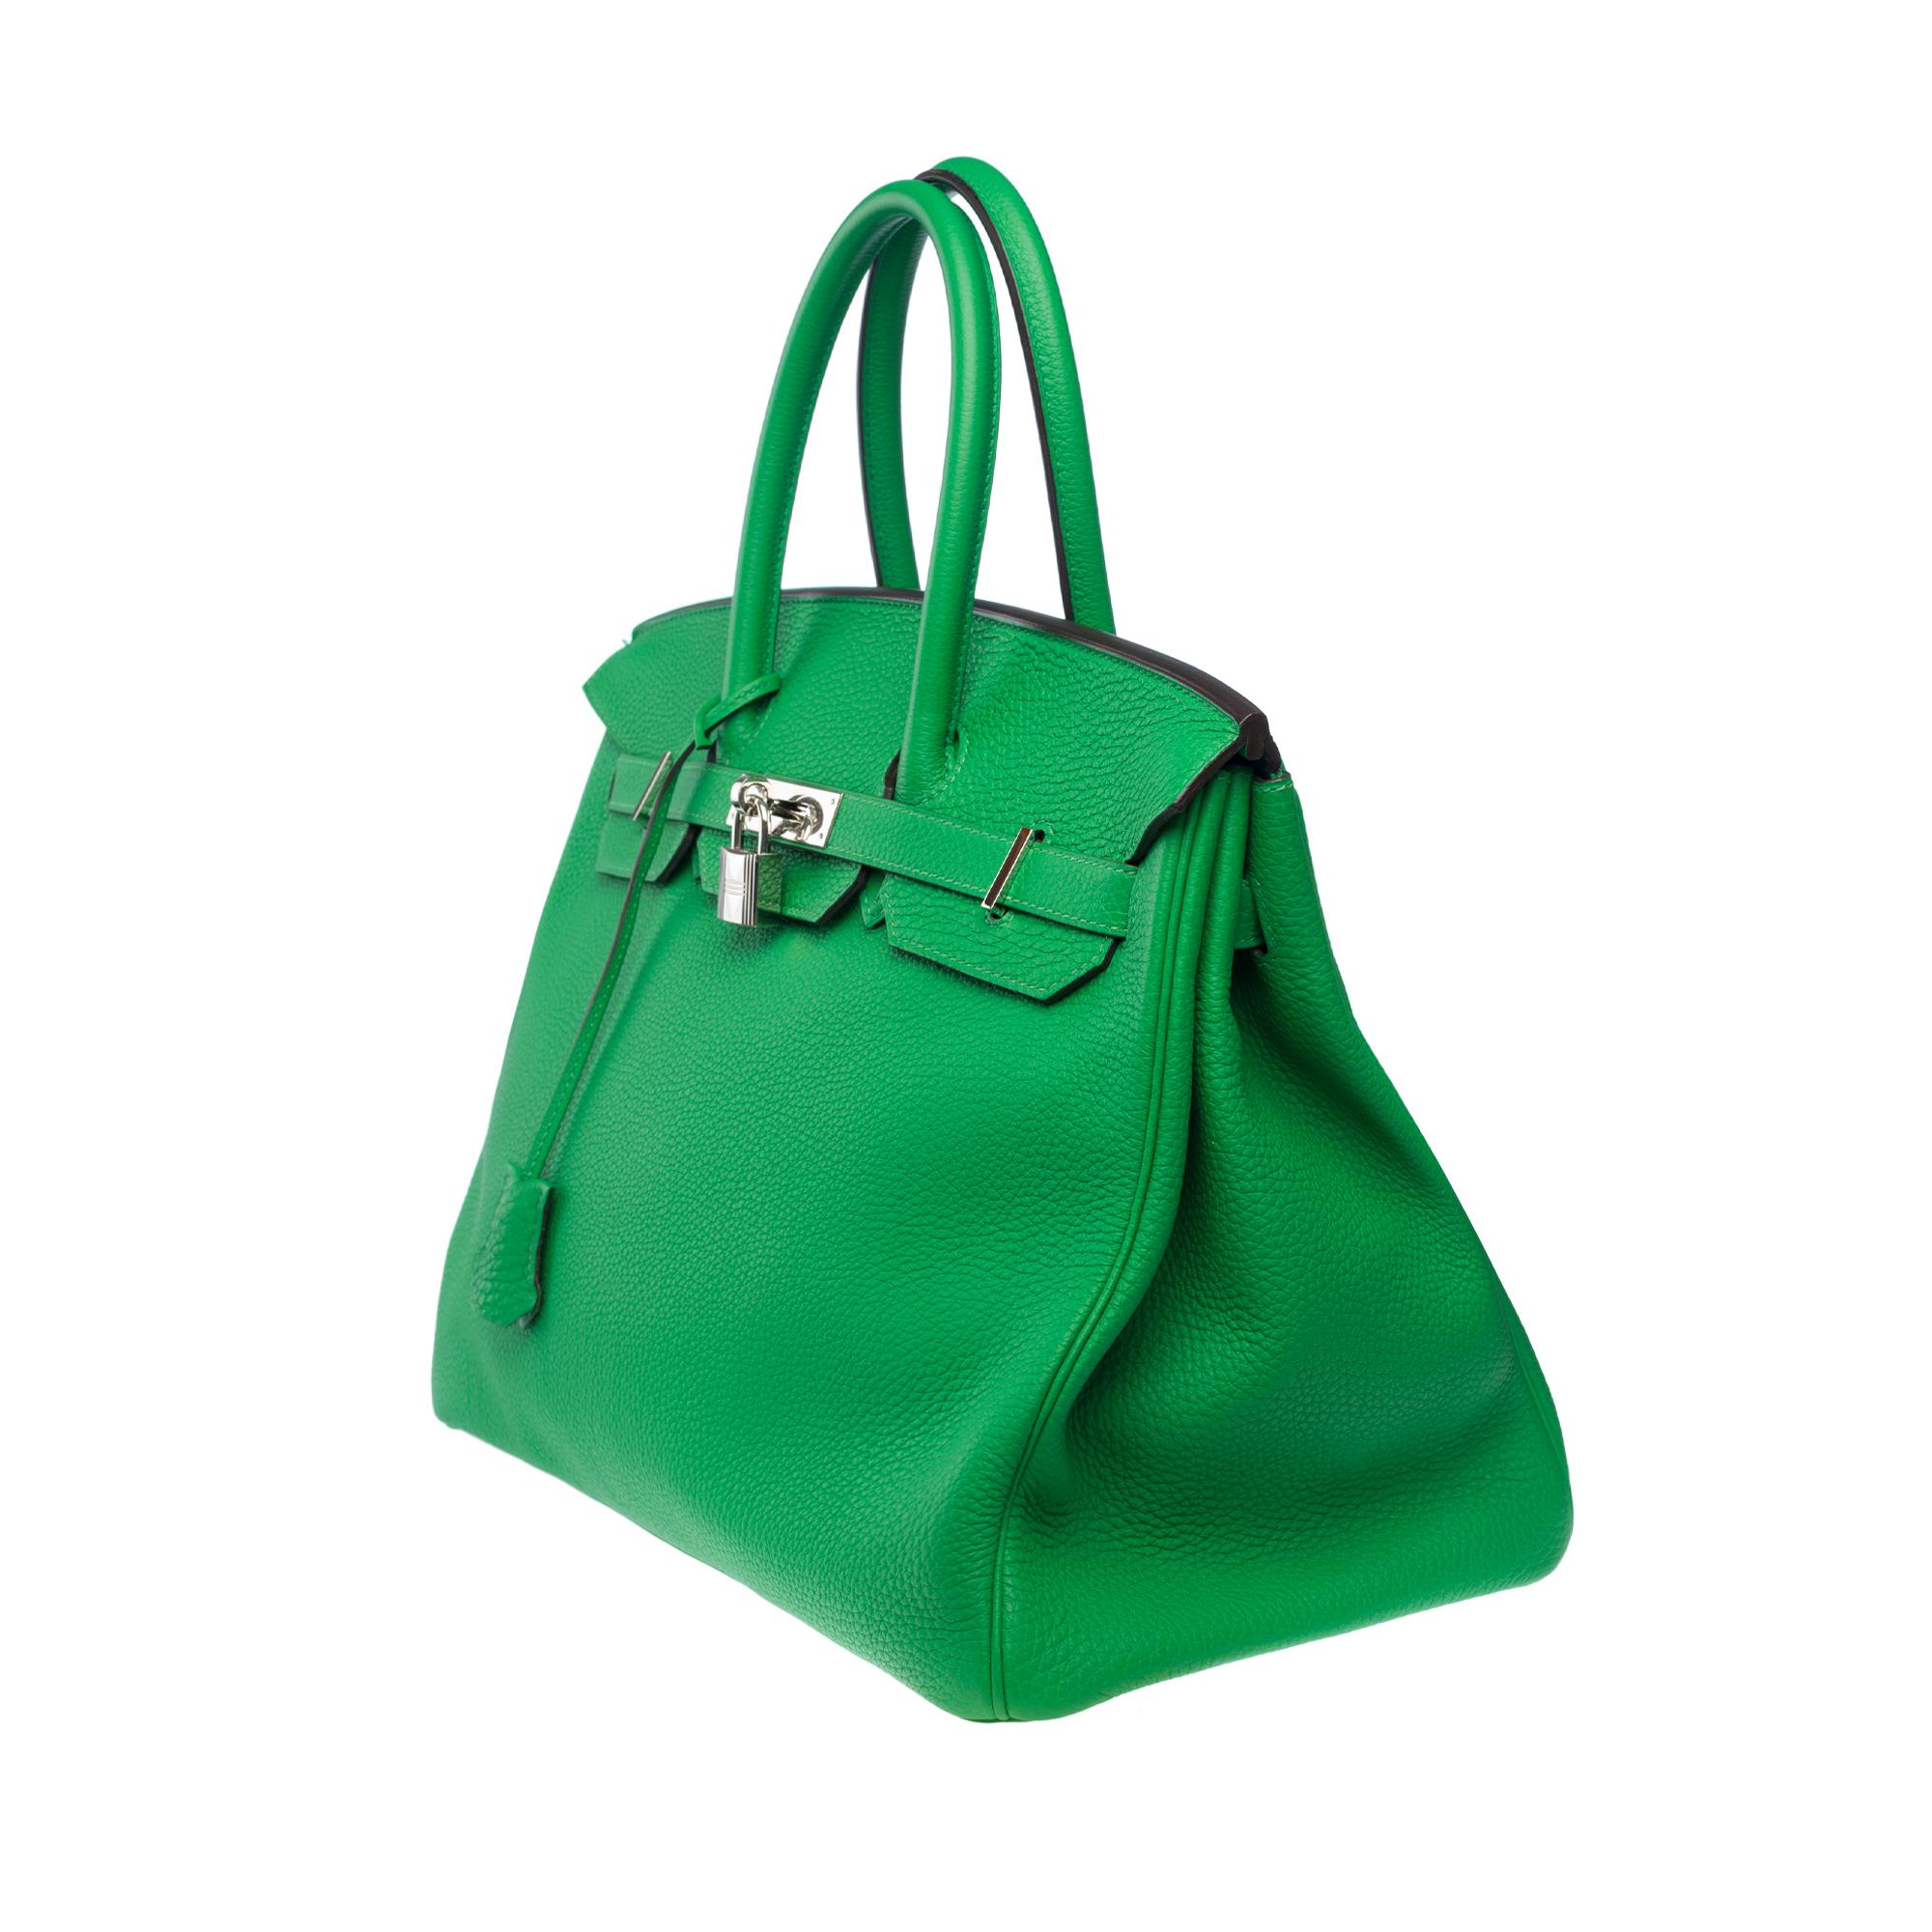 Fantastic Hermès Birkin 35 handbag in Green Bamboo Togo leather, SHW For Sale 2